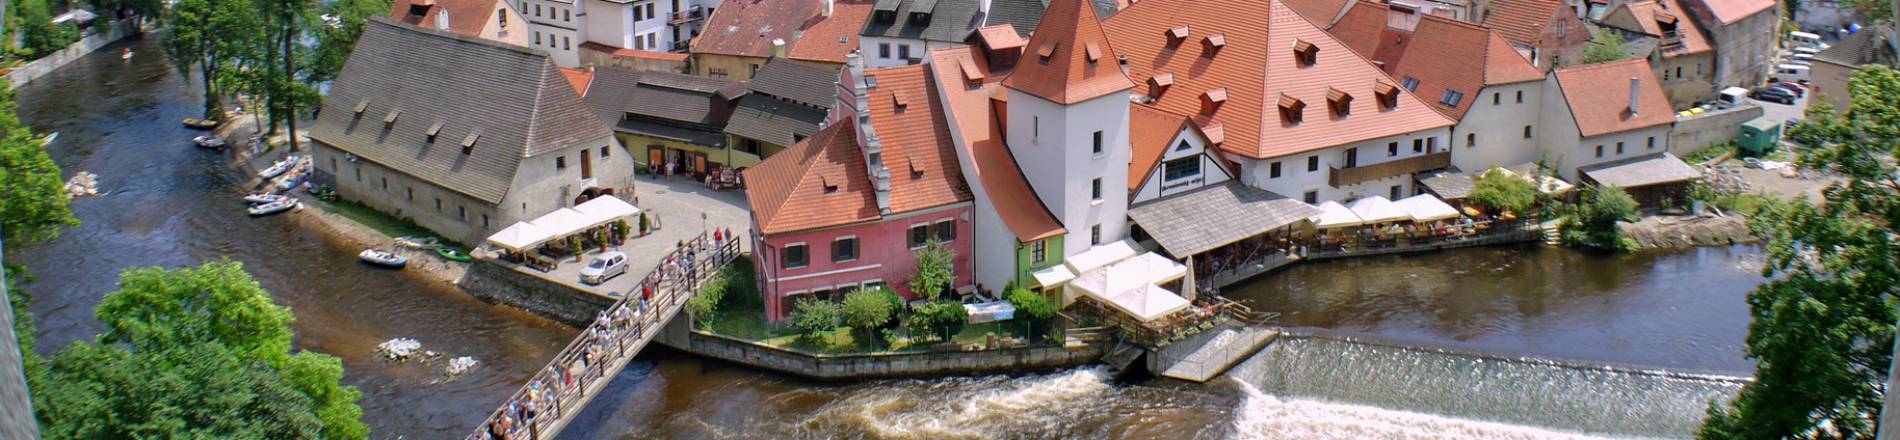 Češki Krumlov i dvorci južne Češke 3 dana PREMIUM